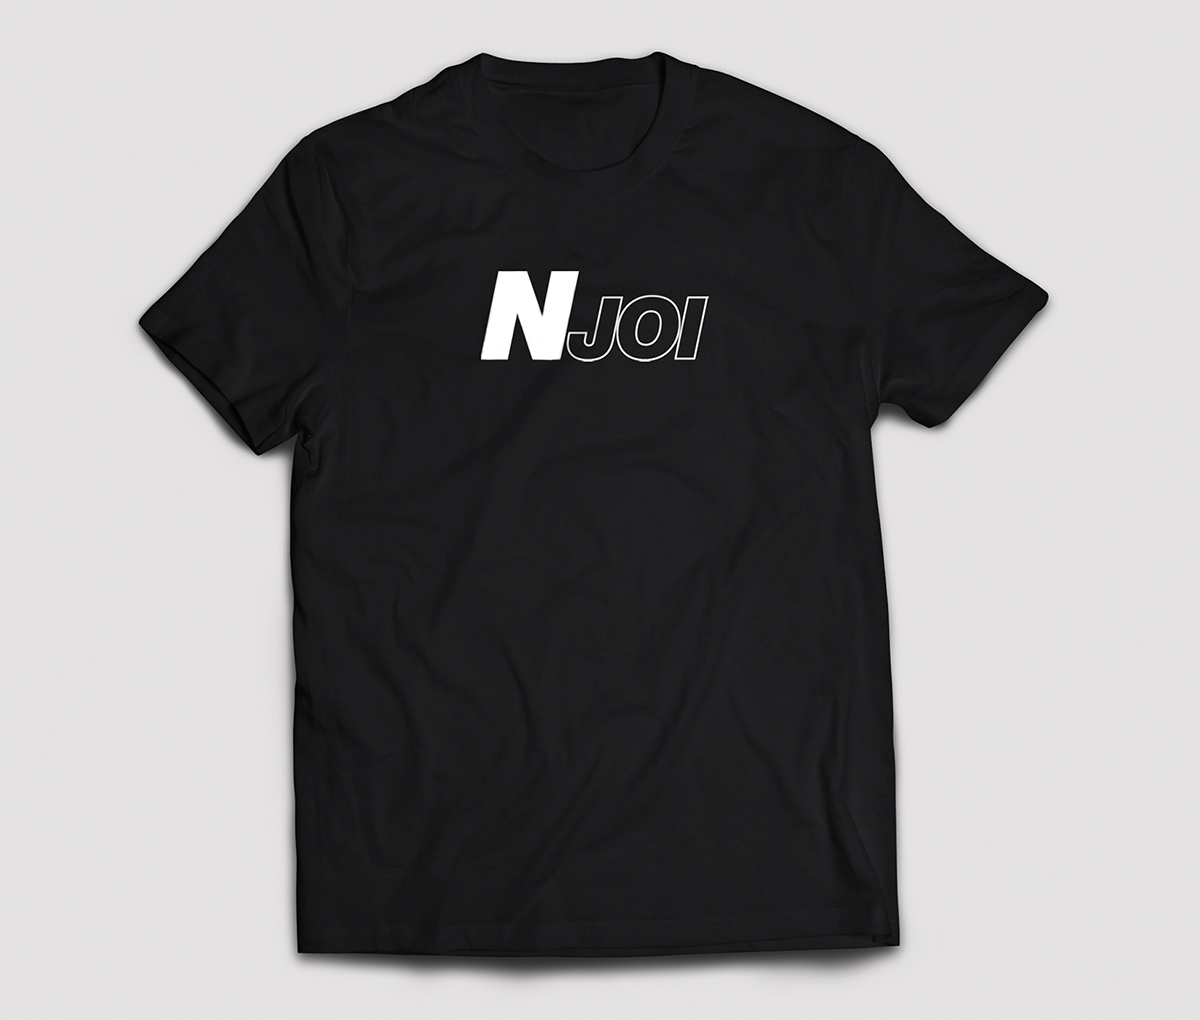 N-JOI Logo T-Shirt